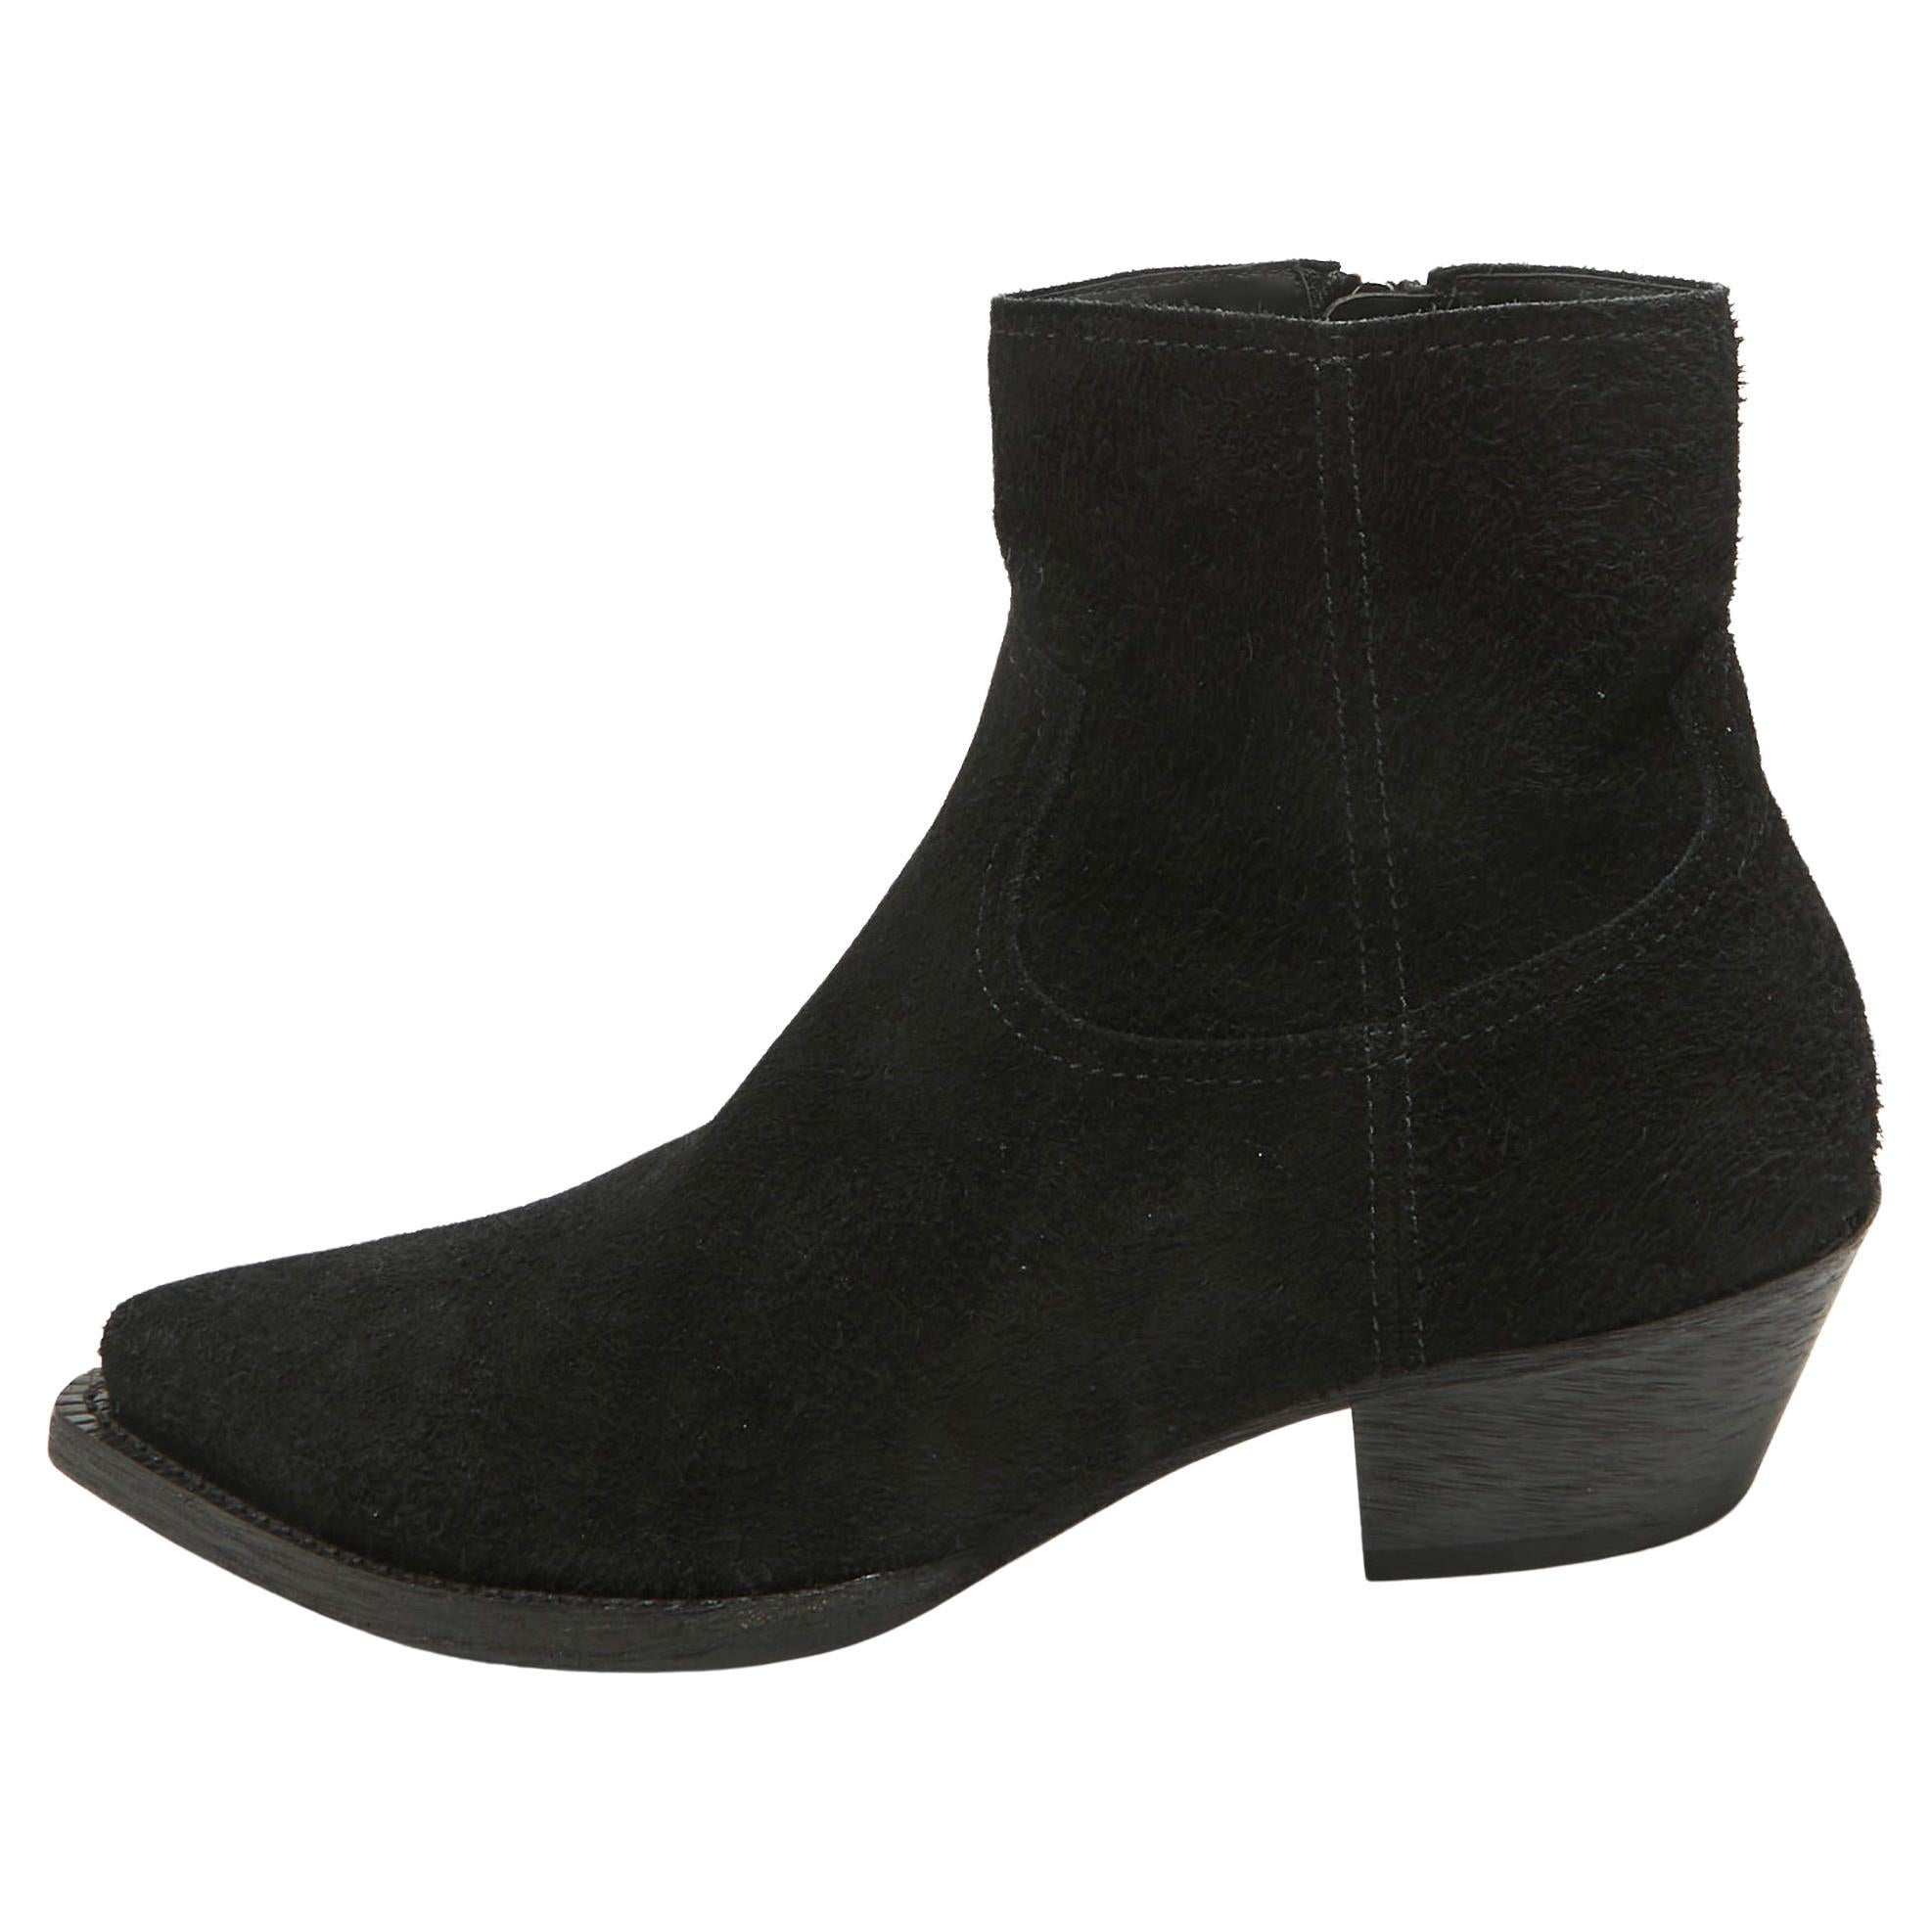 Saint Laurent Black Leather Pointed Toe Boots Size 43